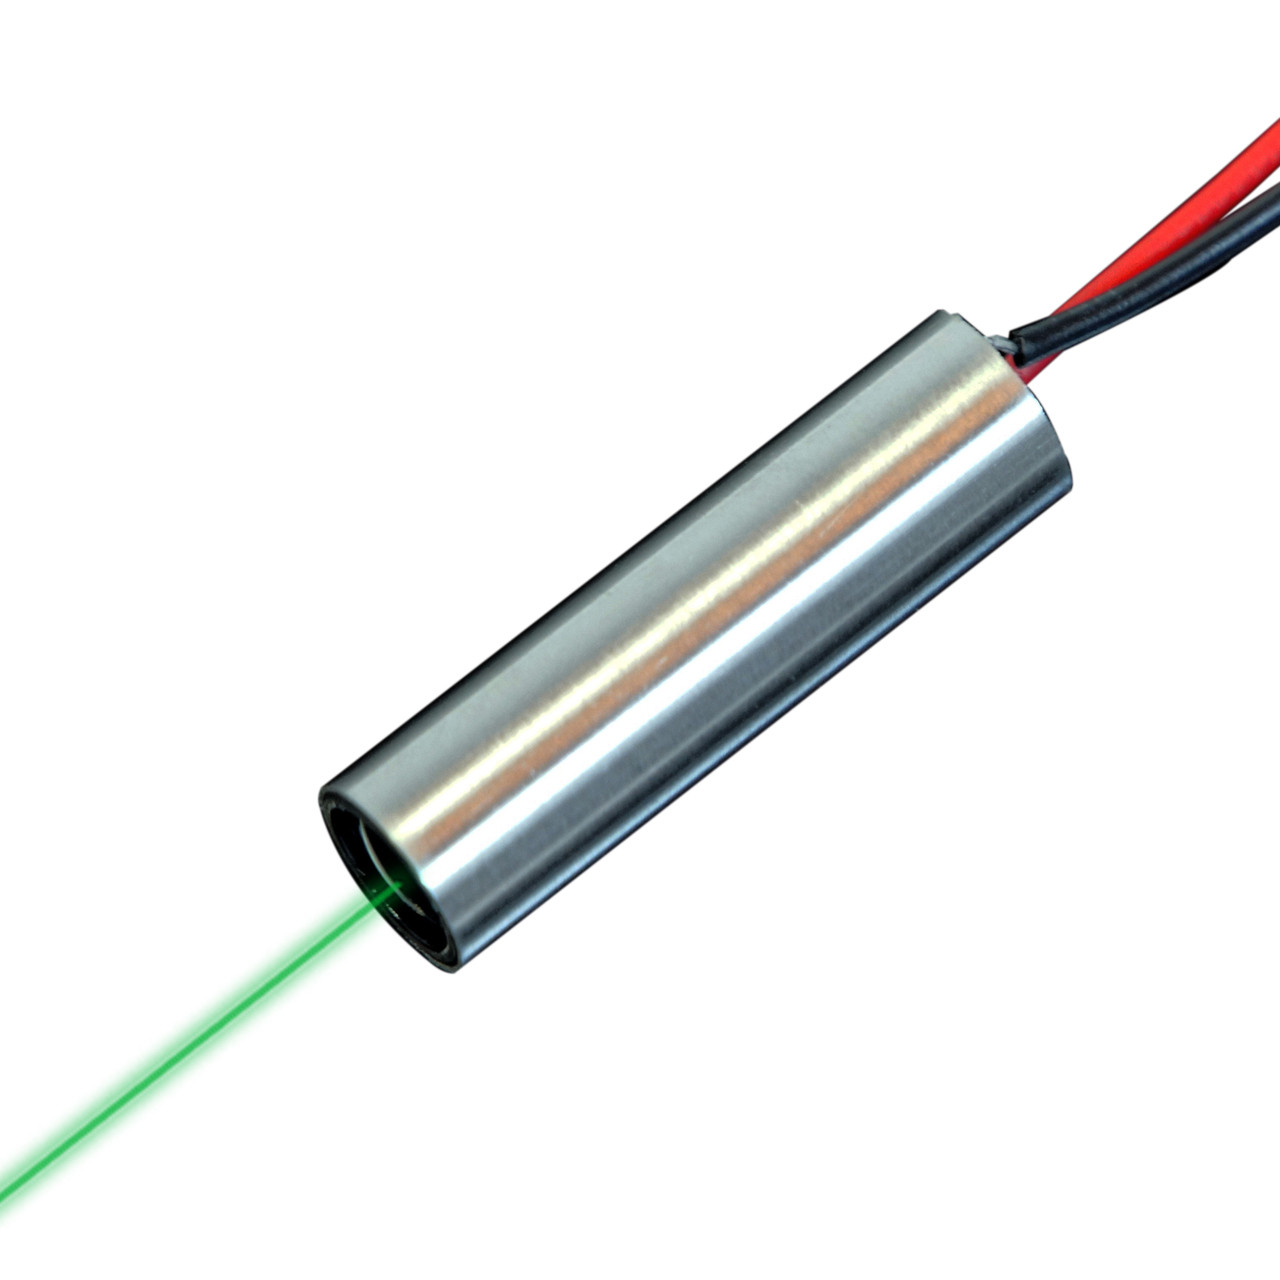 520nm Direct Green Laser Module, VLM-520-52 LPT